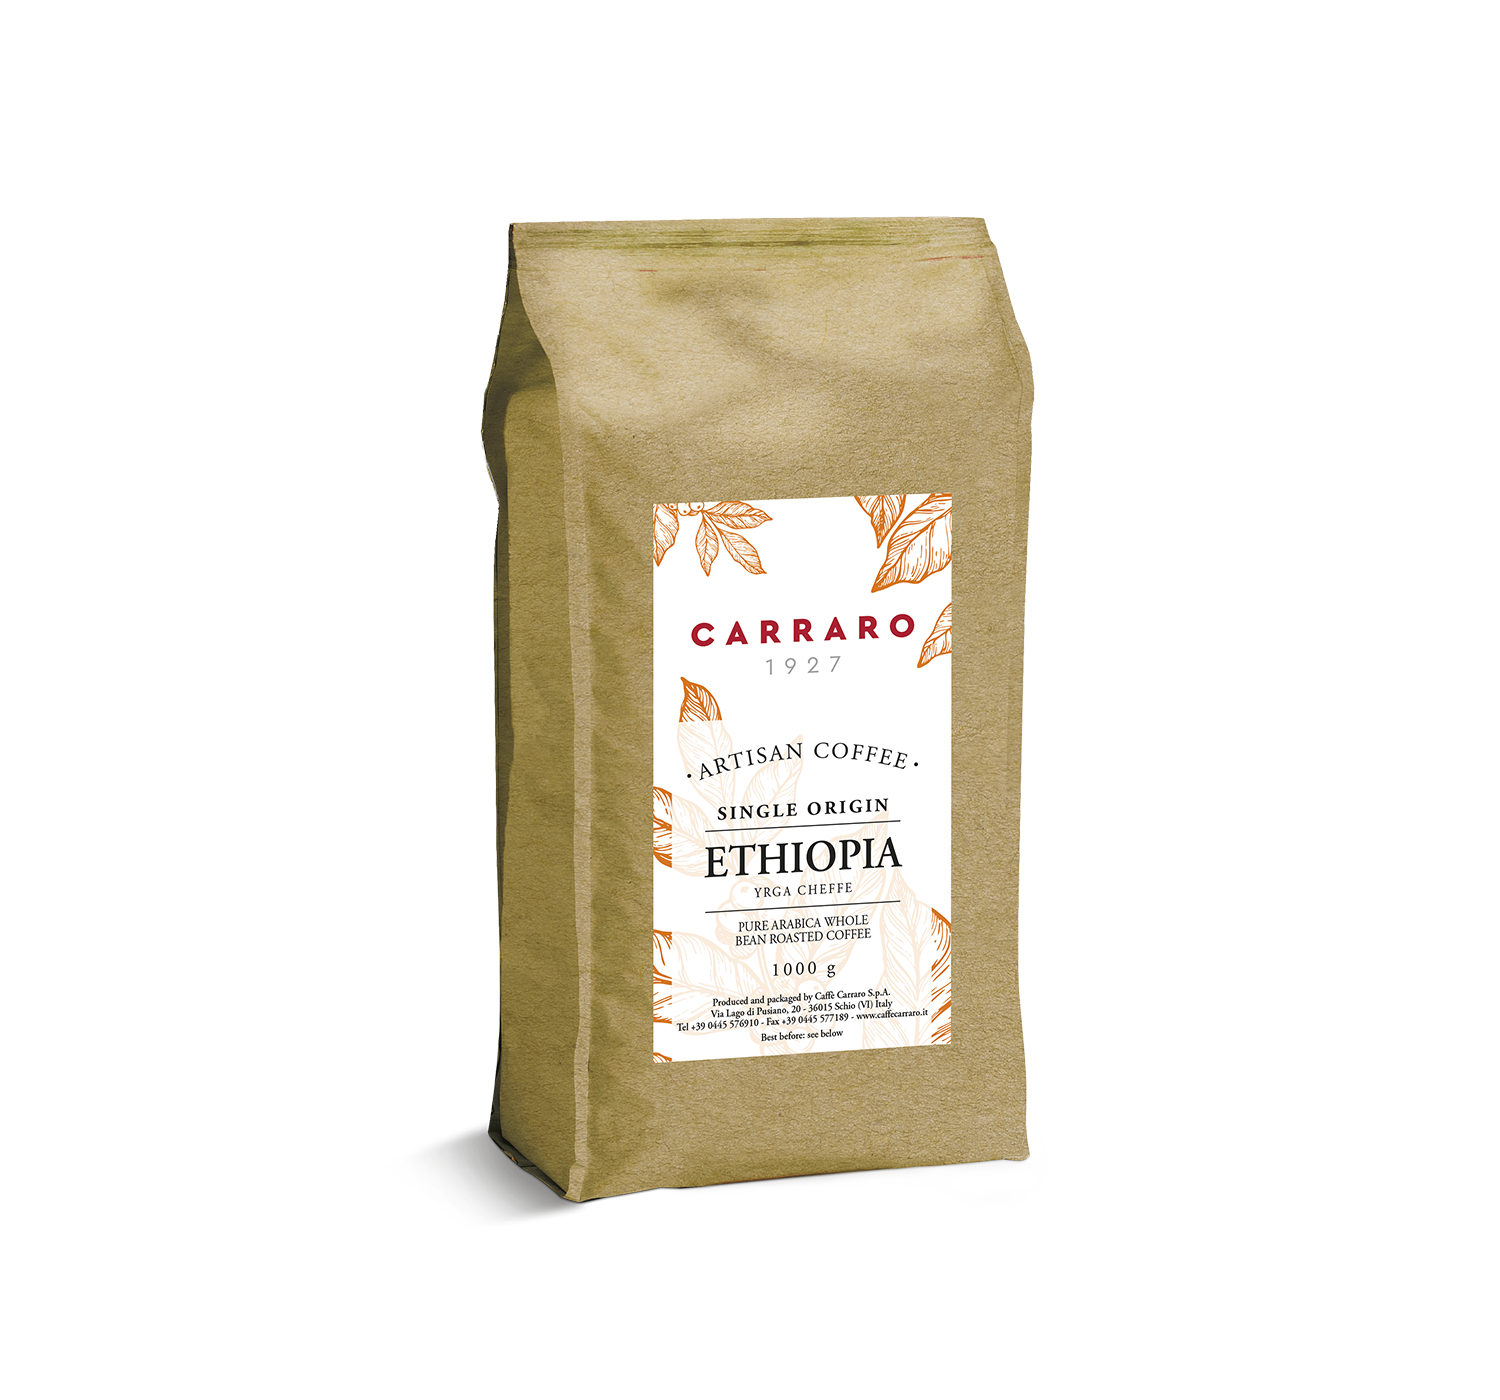 Artisan Coffee - Ethiopia – coffee beans 1000 g - Shop online Caffè Carraro